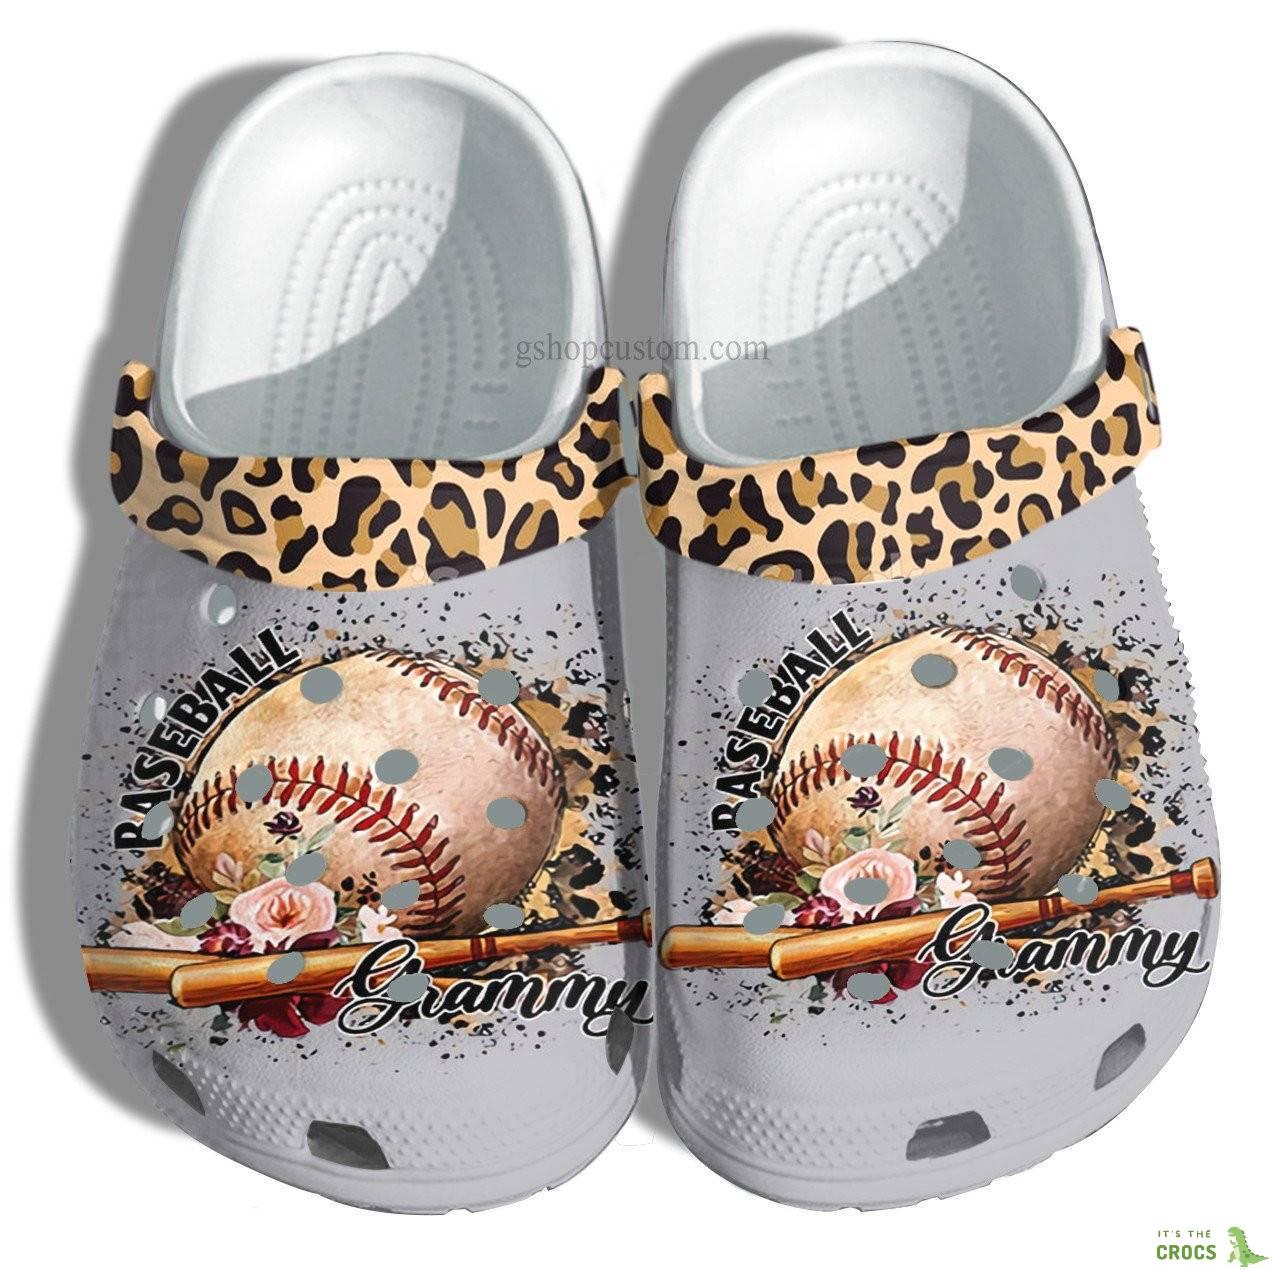 Baseball Grammy Leopard Skin Flower Crocs Shoes For Mother Day – Baseball Grandma Crocs Shoes Croc Clogs Customize Name